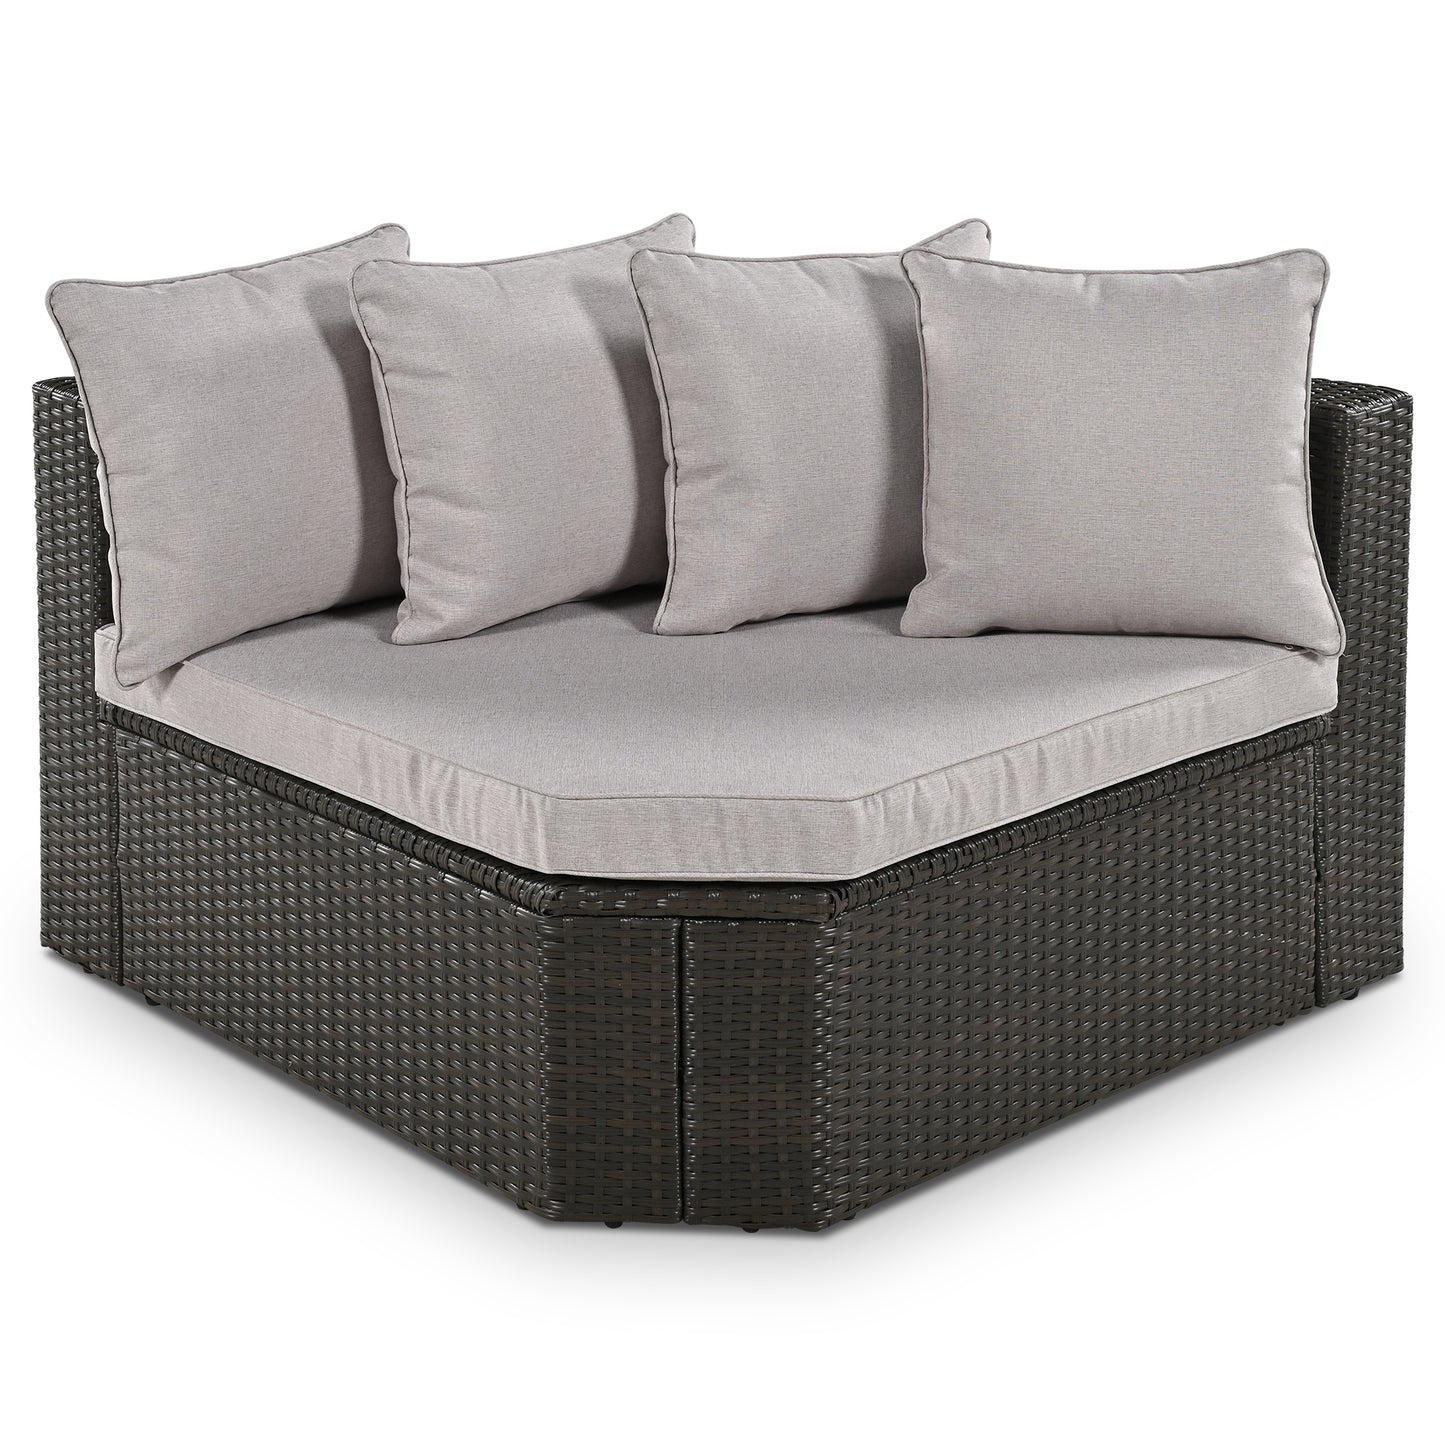 GO 7-piece Outdoor Wicker Sofa Set, Rattan Sofa Lounger, With  Colorful Pillows, Conversation Sofa, For Patio, Garden, Deck, Brown Wicker, Gray Cushion